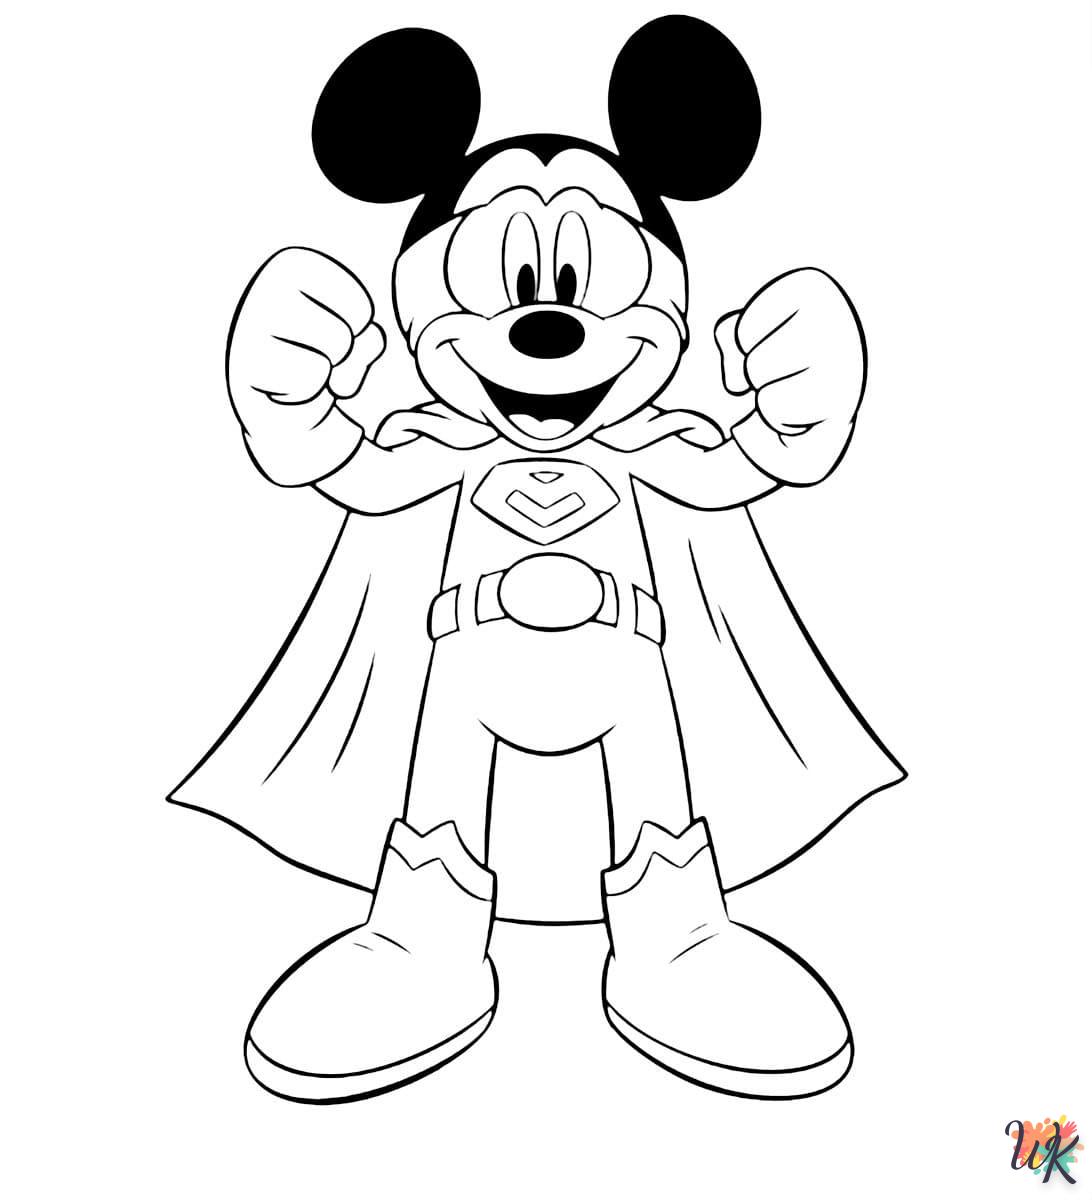 Kleurplaat Mickey Mouse8